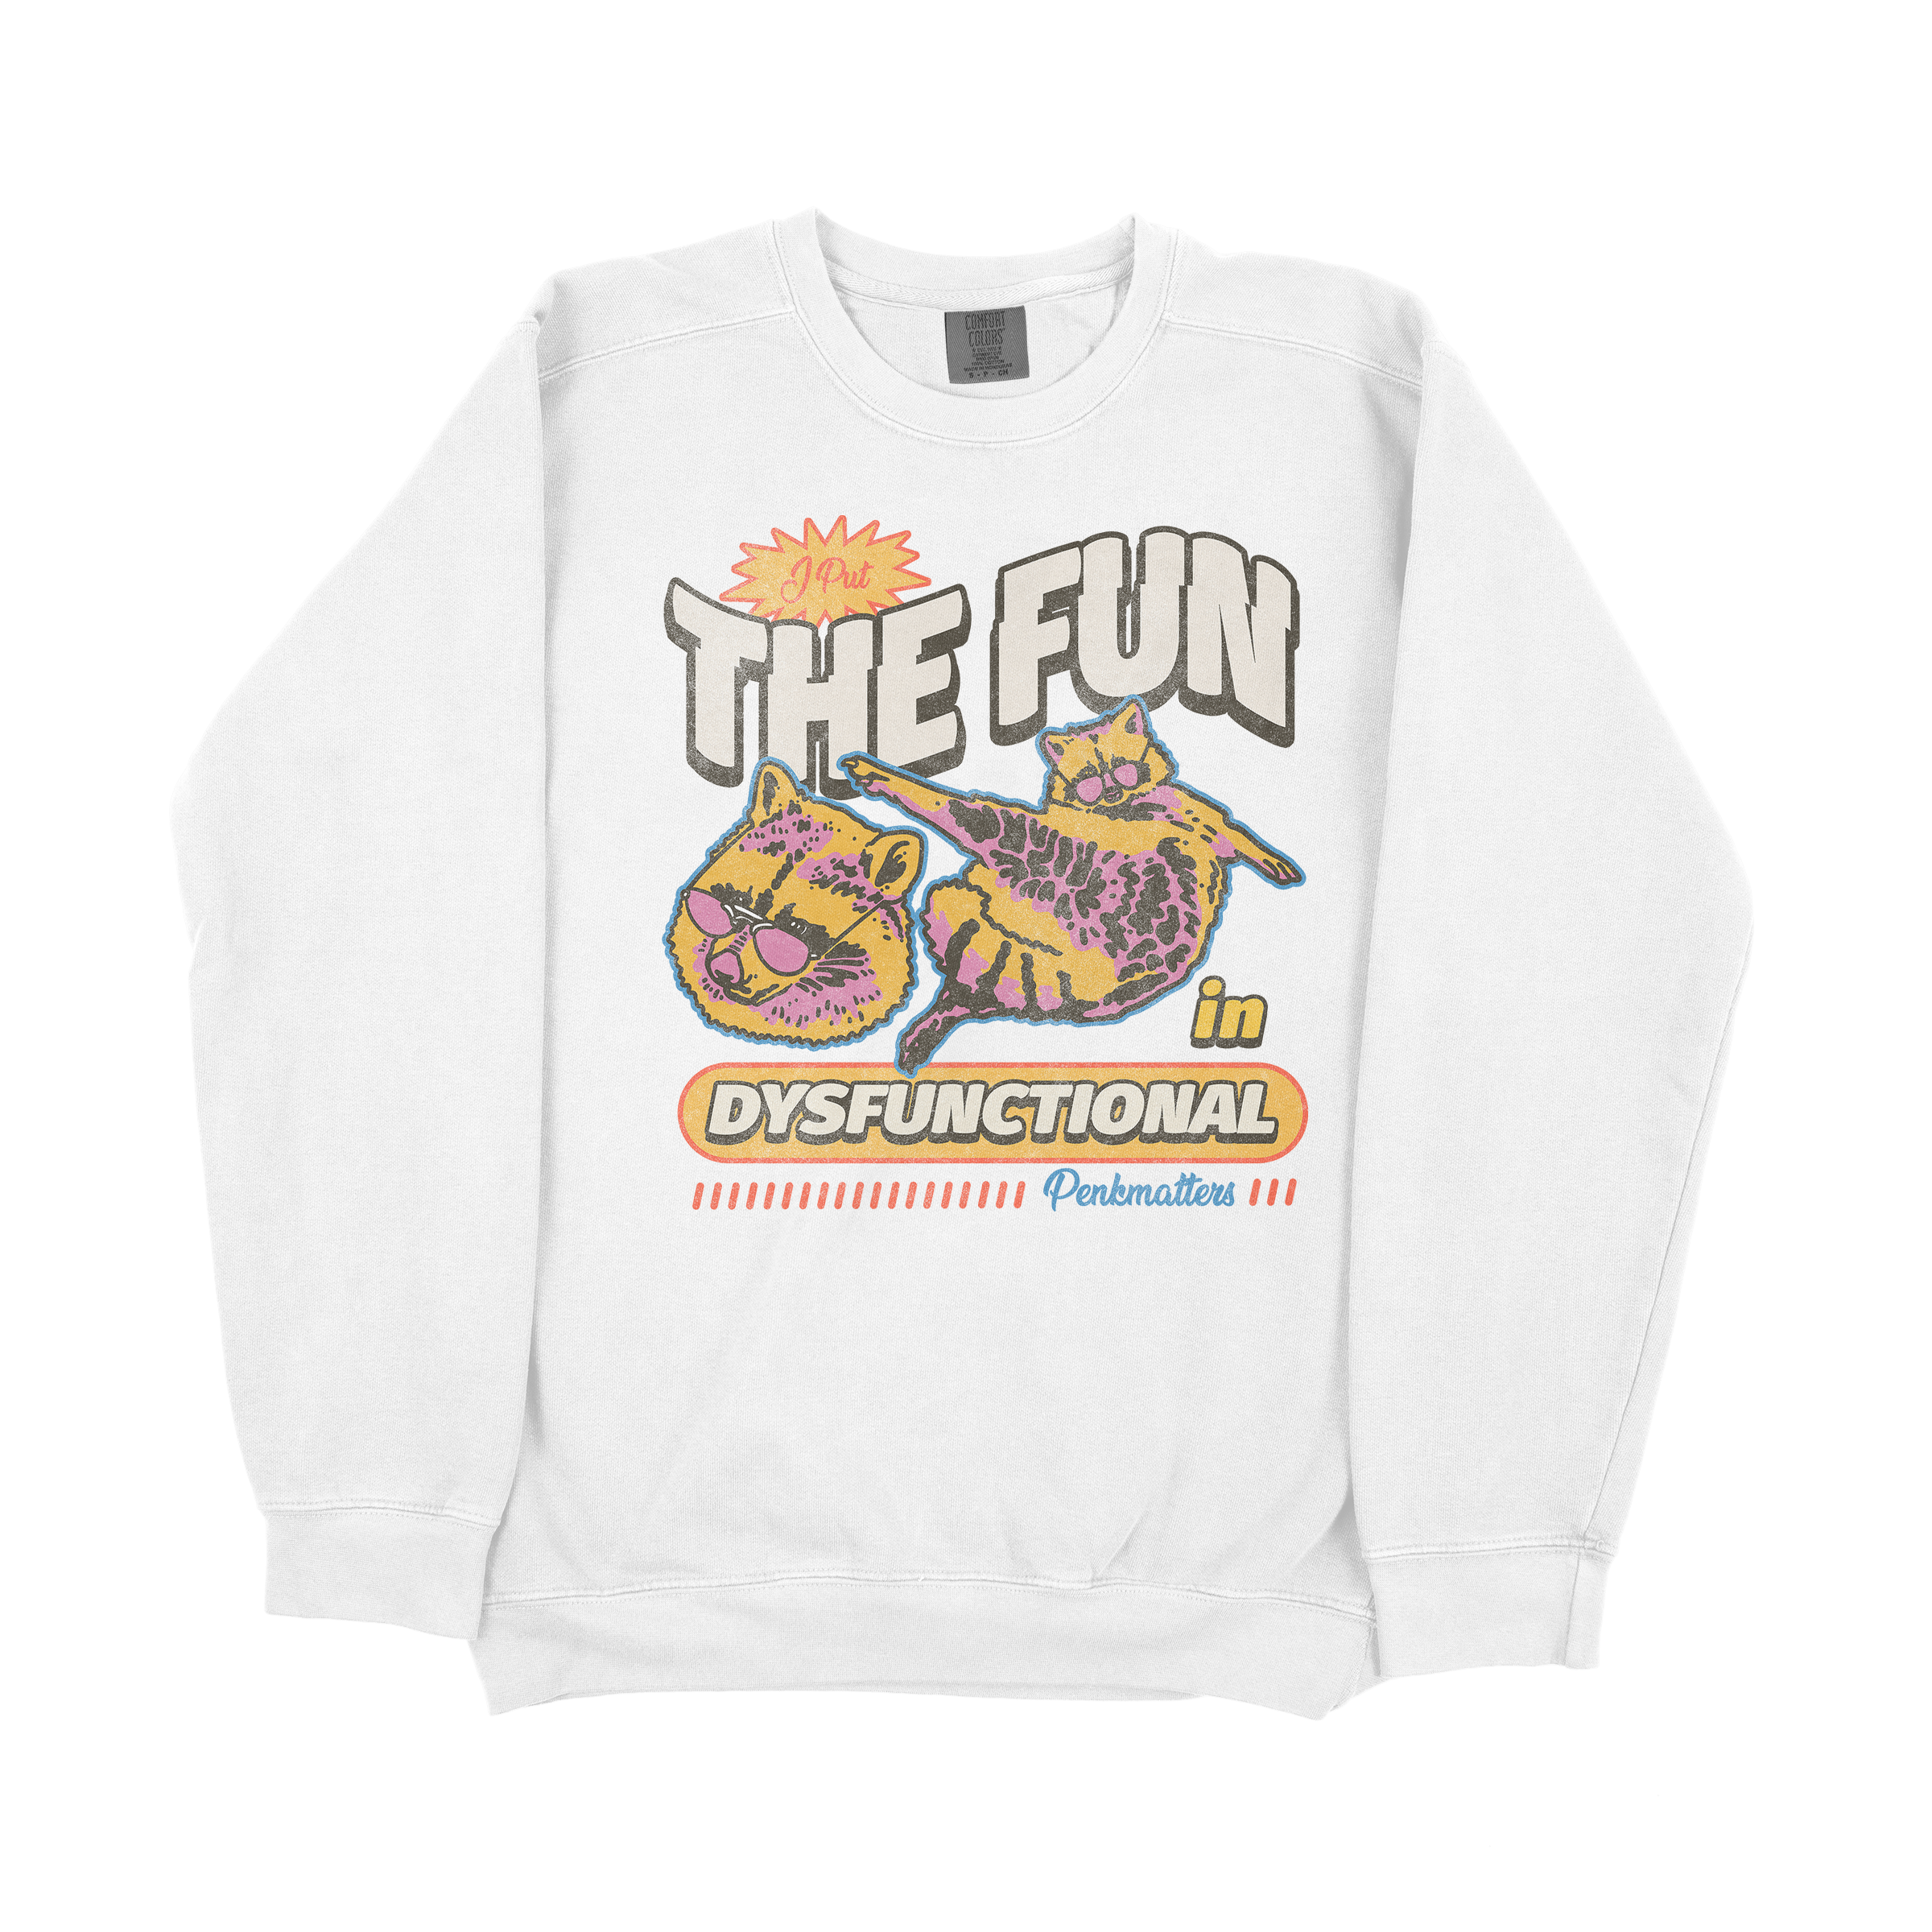 The Fun sweatshirt with unique graphic print.